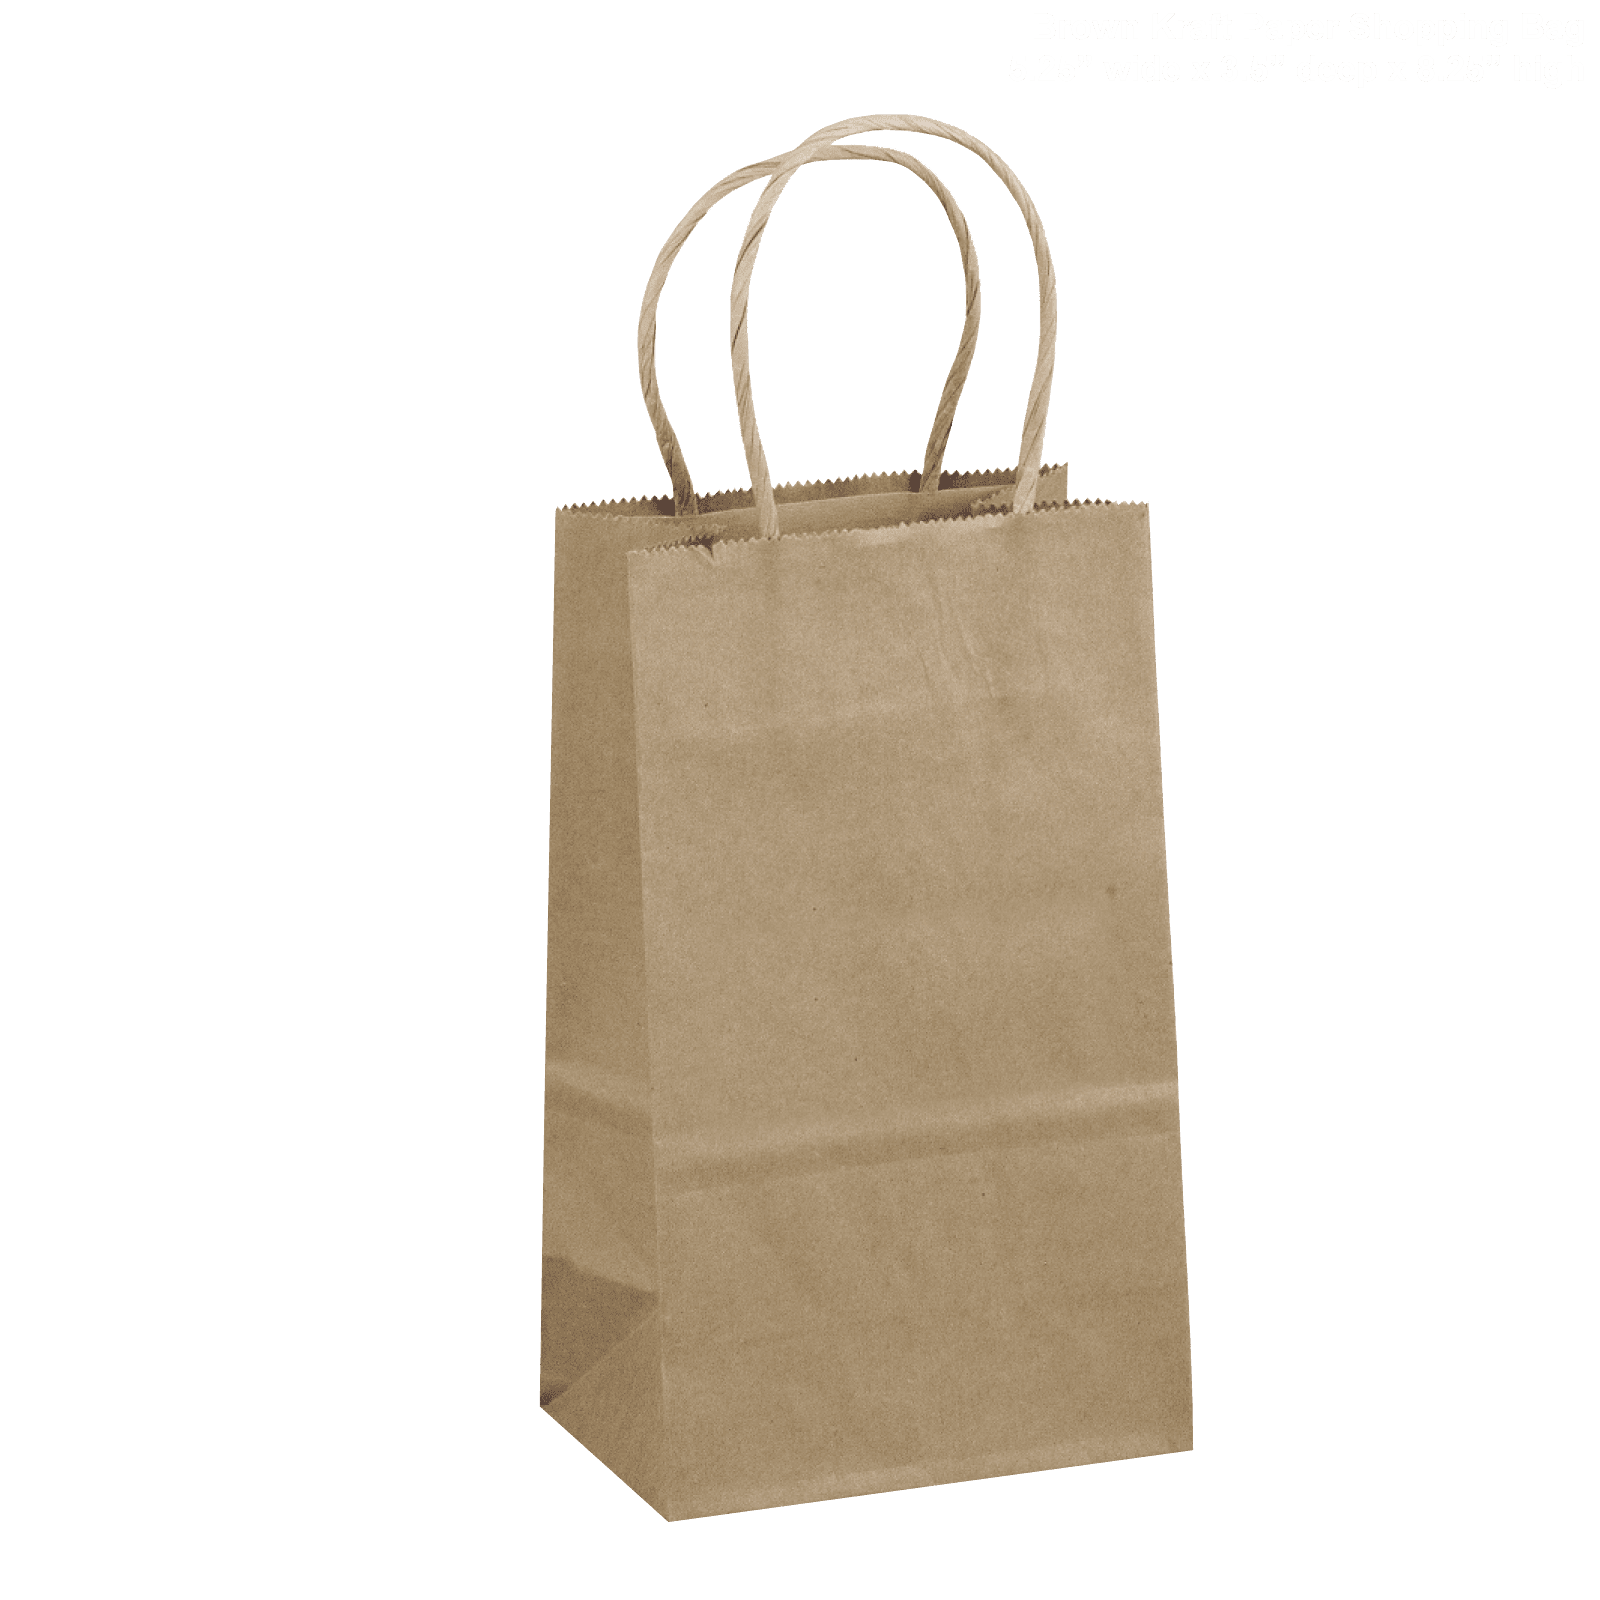 chanel paper gift bag